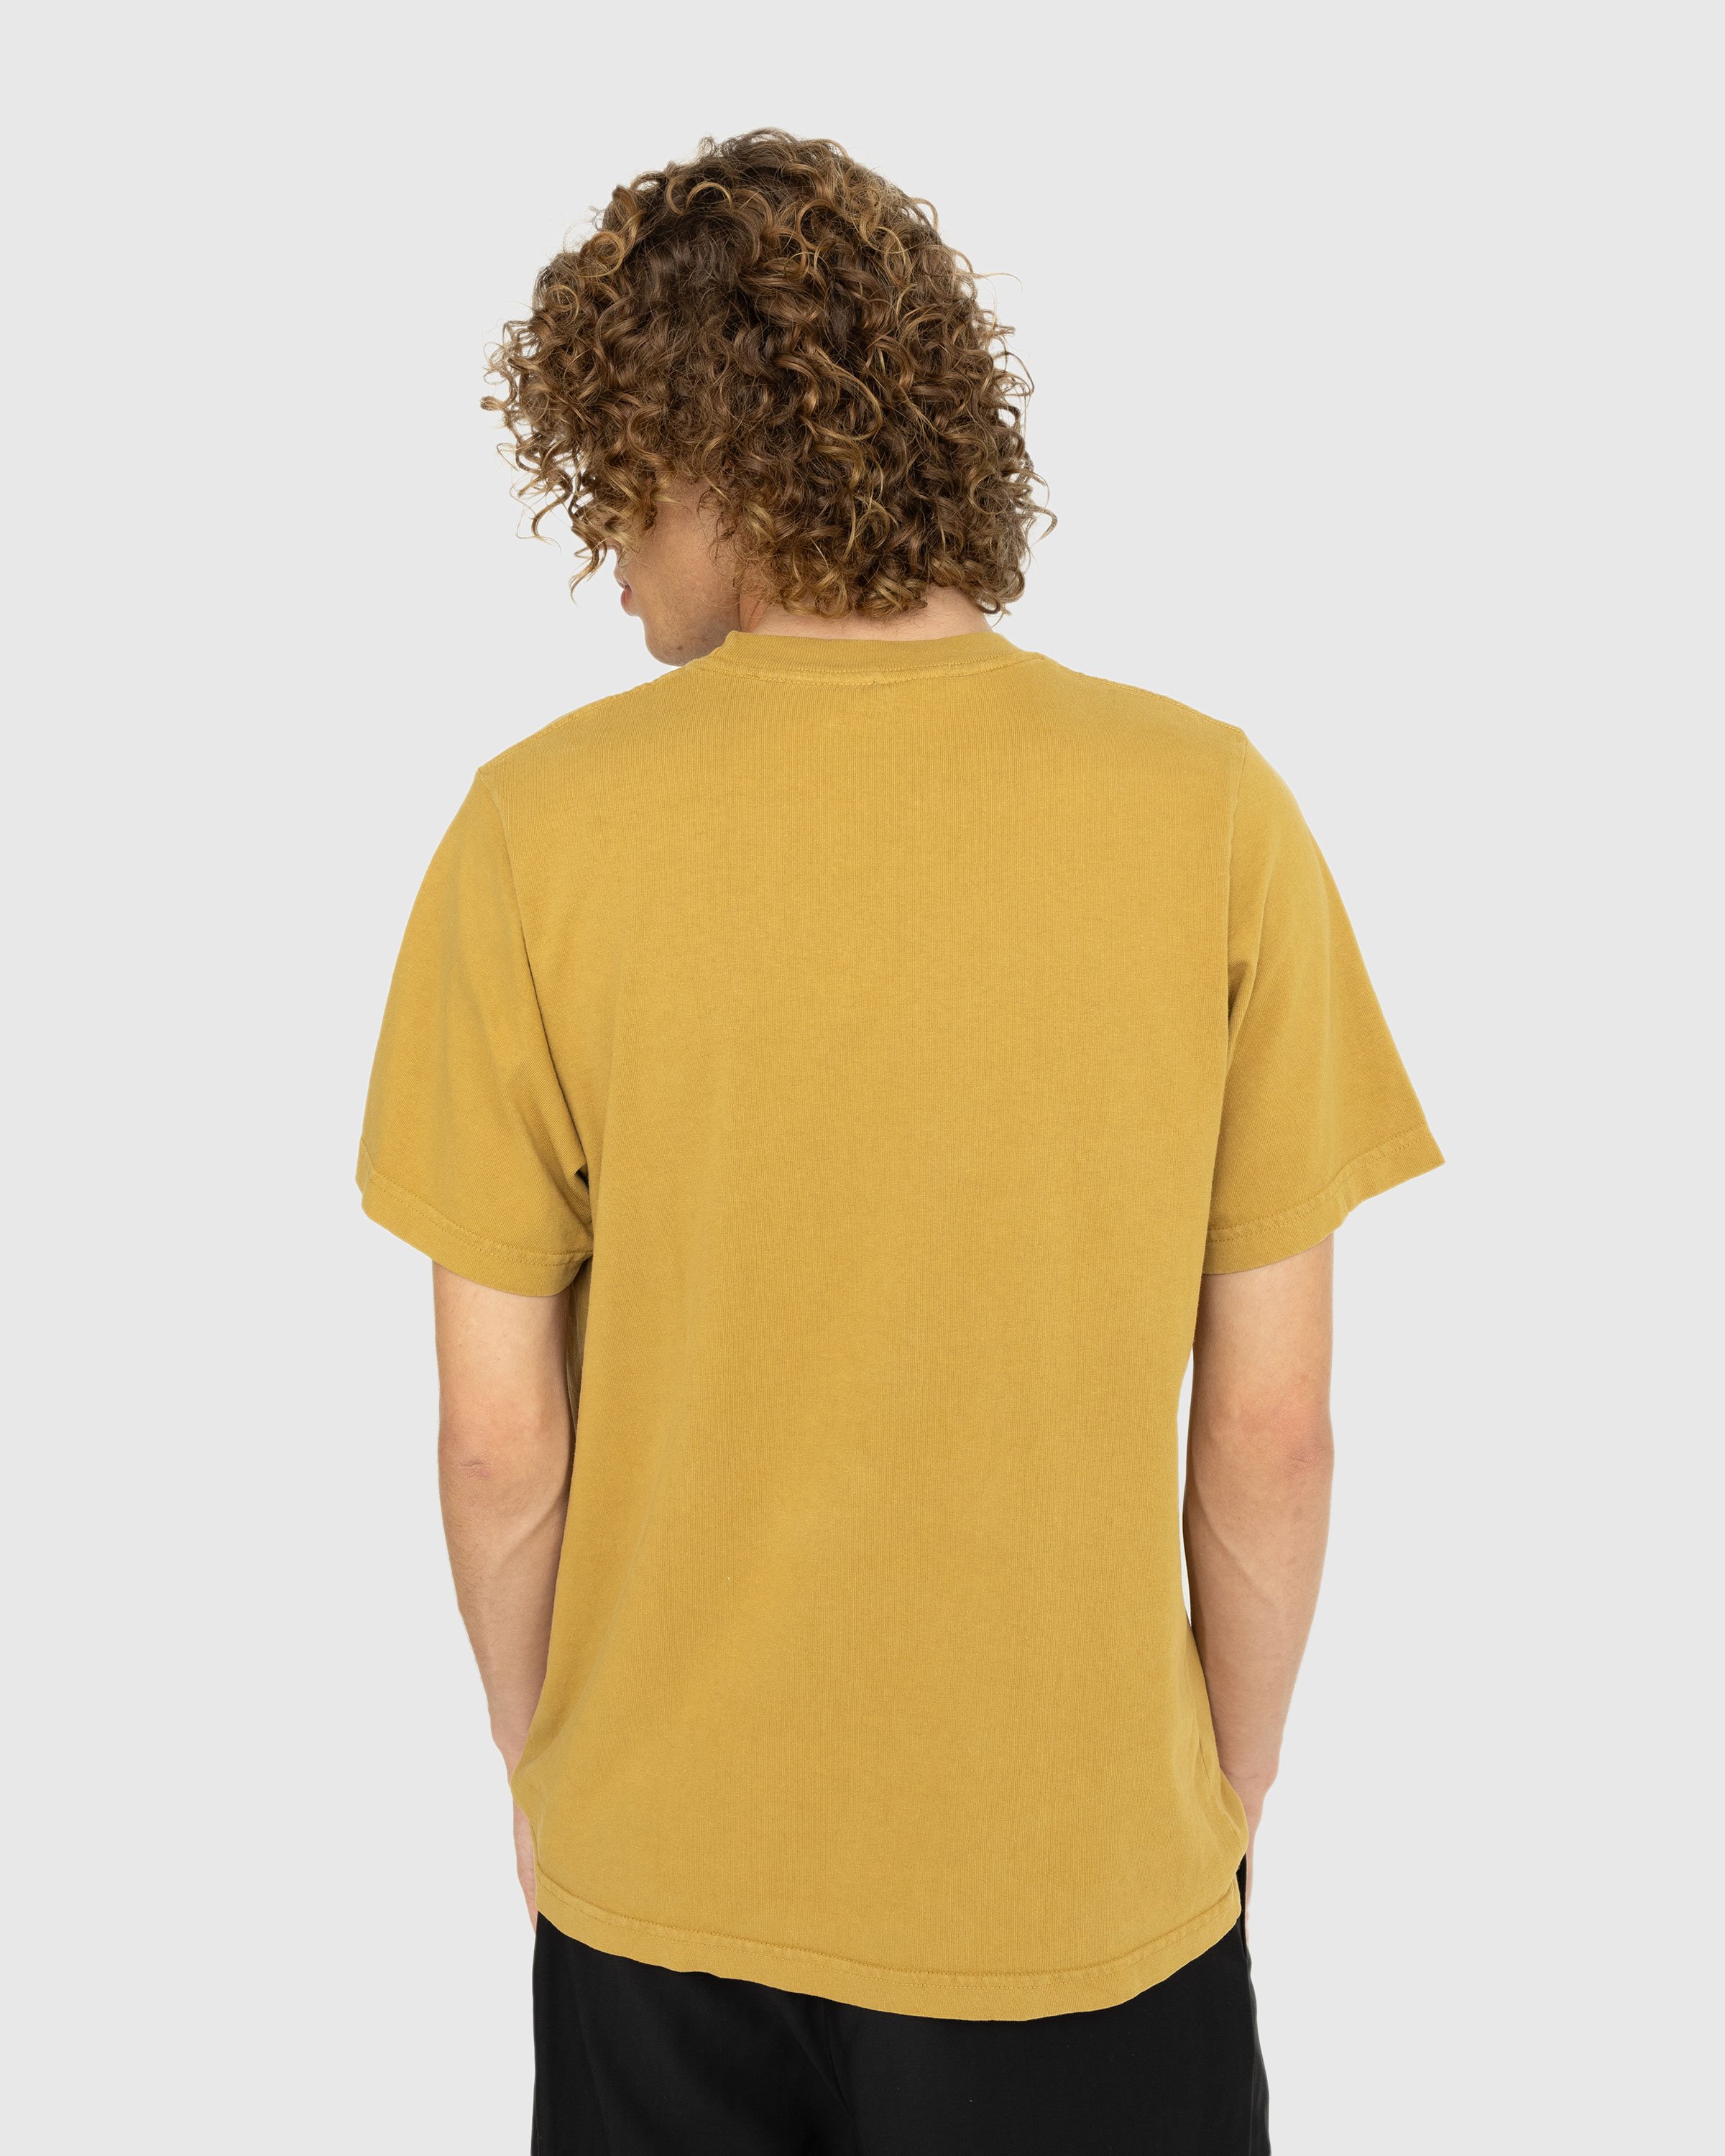 Noon Goons - OG OE T-Shirt Harvest Gold - Clothing - Brown - Image 3